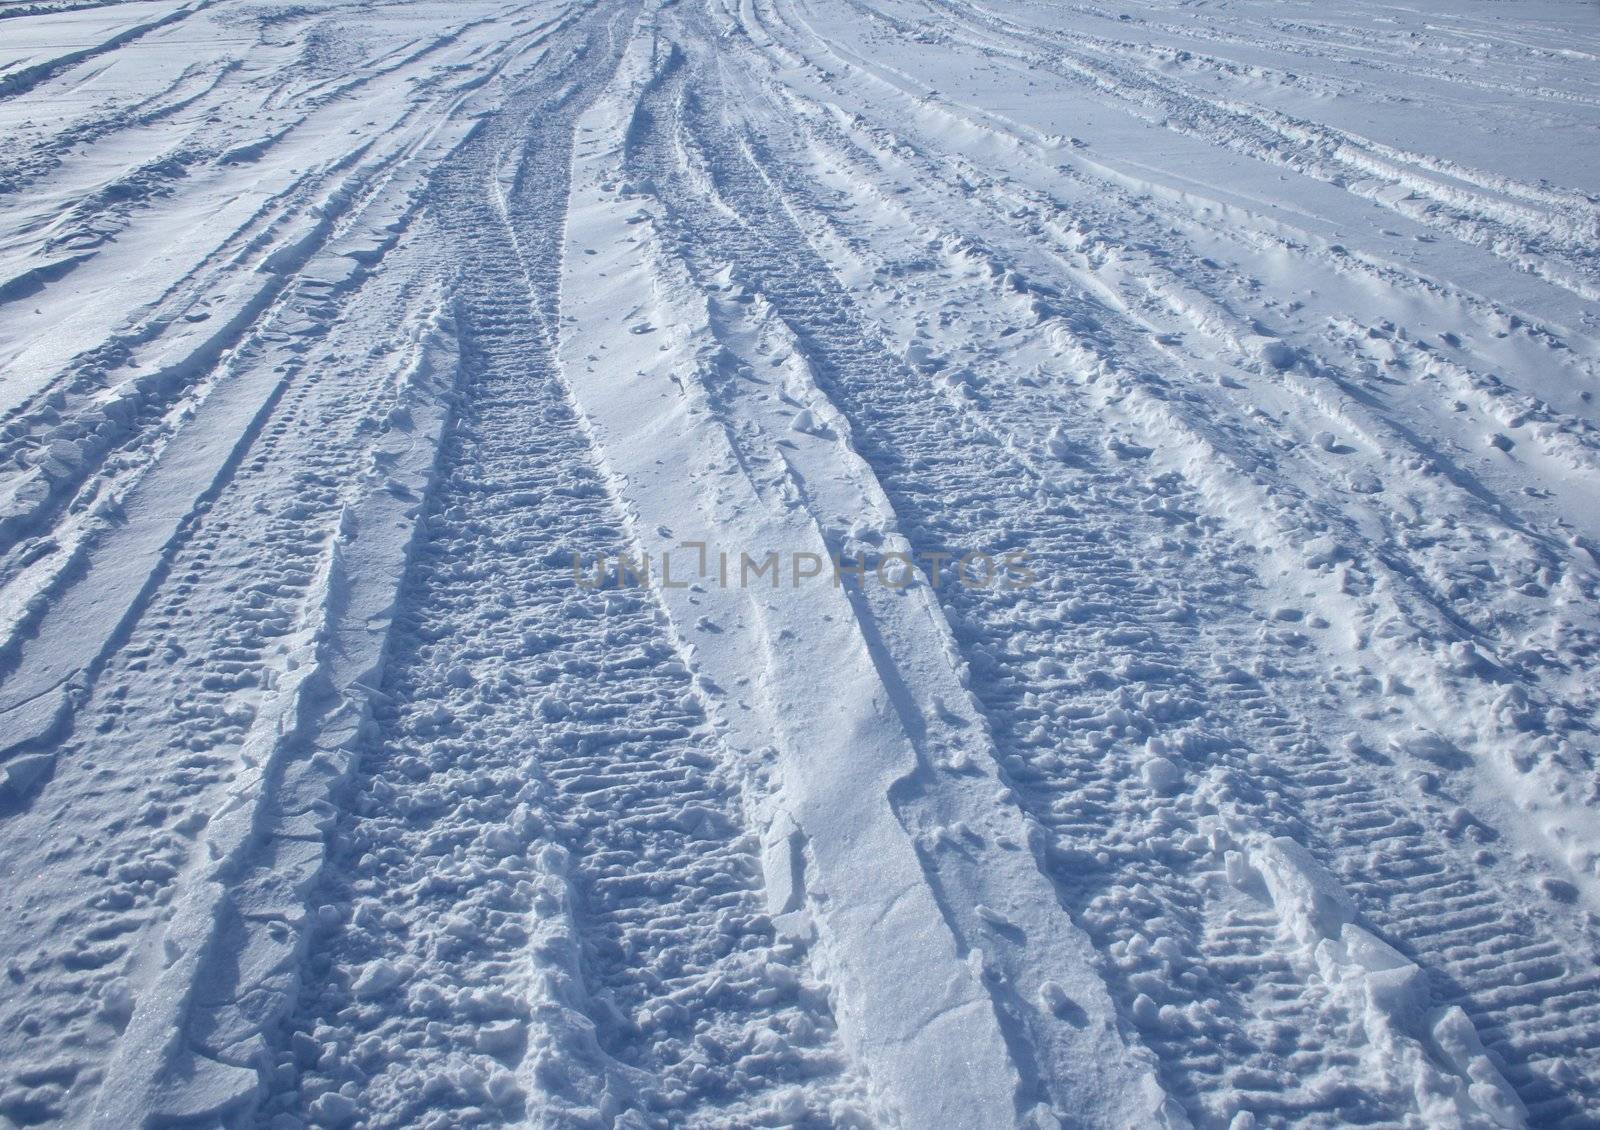 Car tracks crossing the snowy terrain by anikasalsera